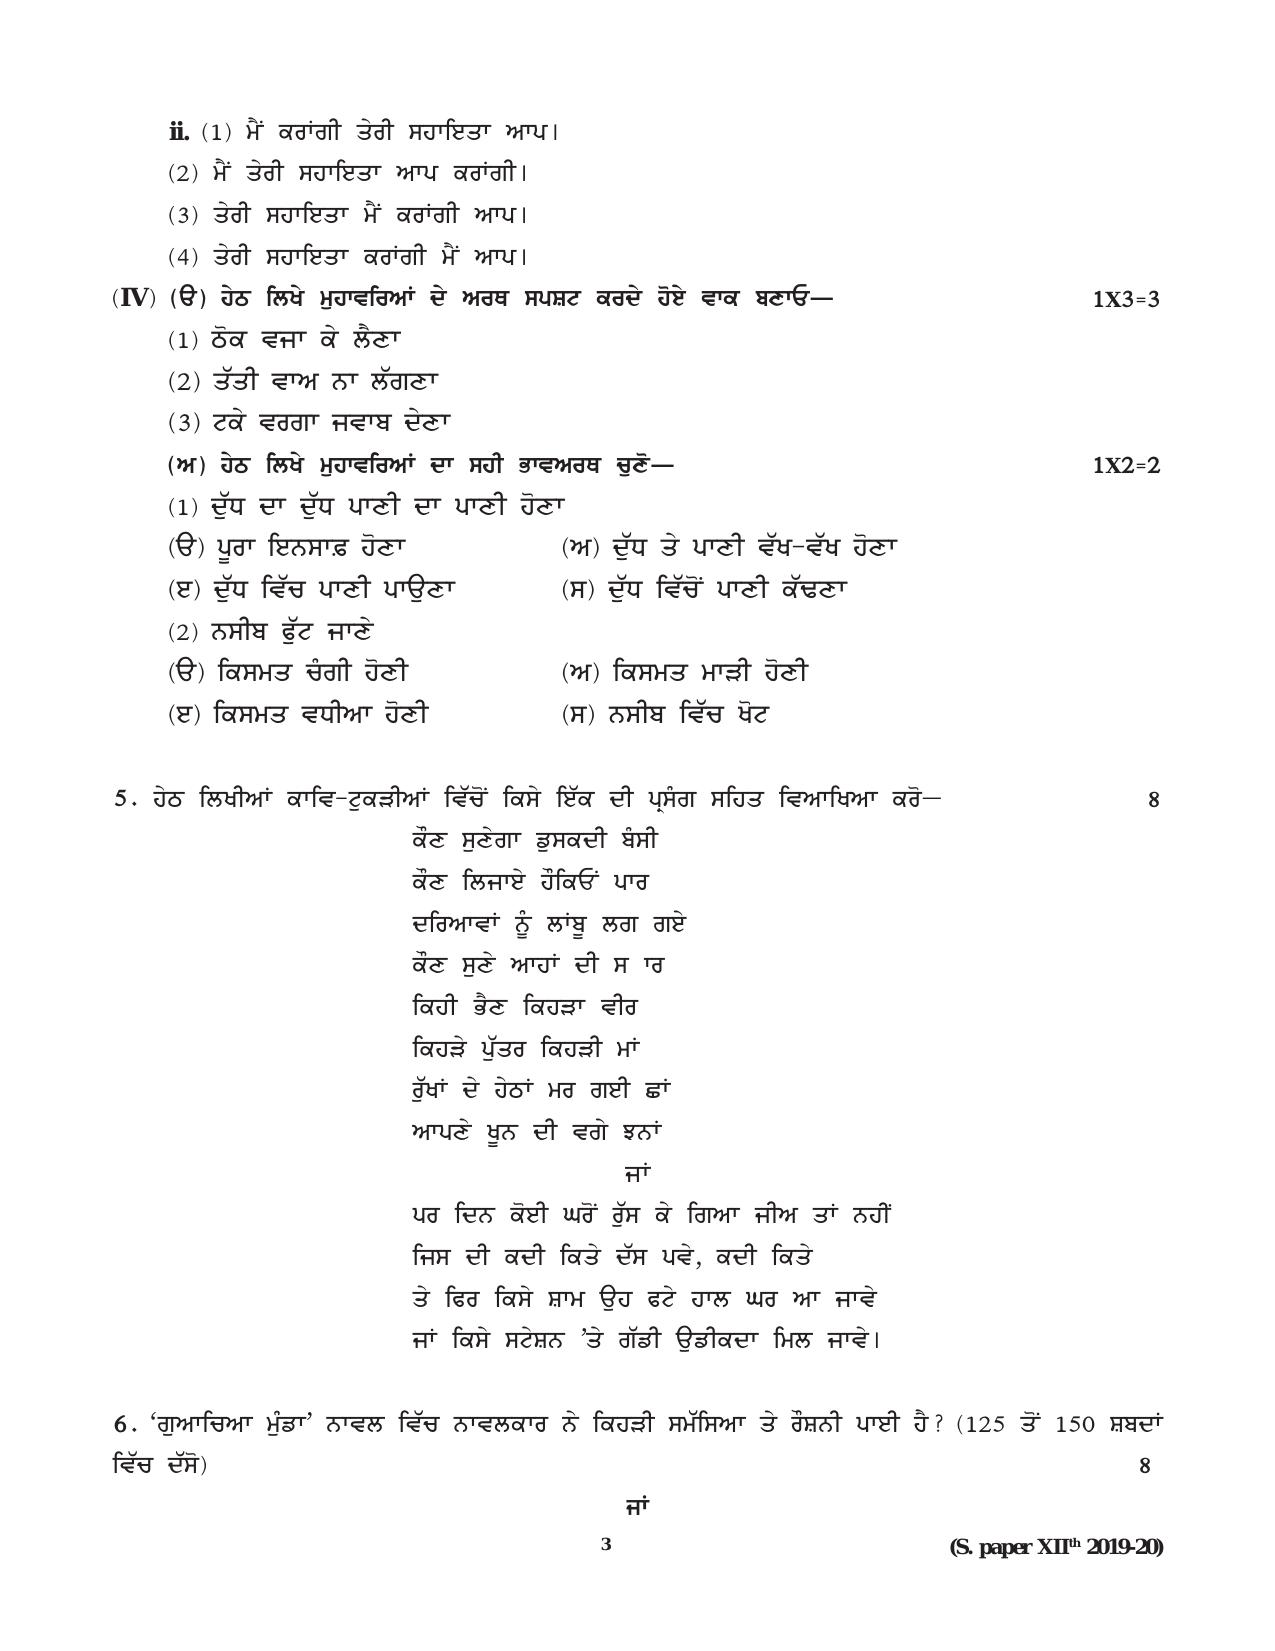 CBSE Class 12 Punjabi -Sample Paper 2019-20 - Page 3